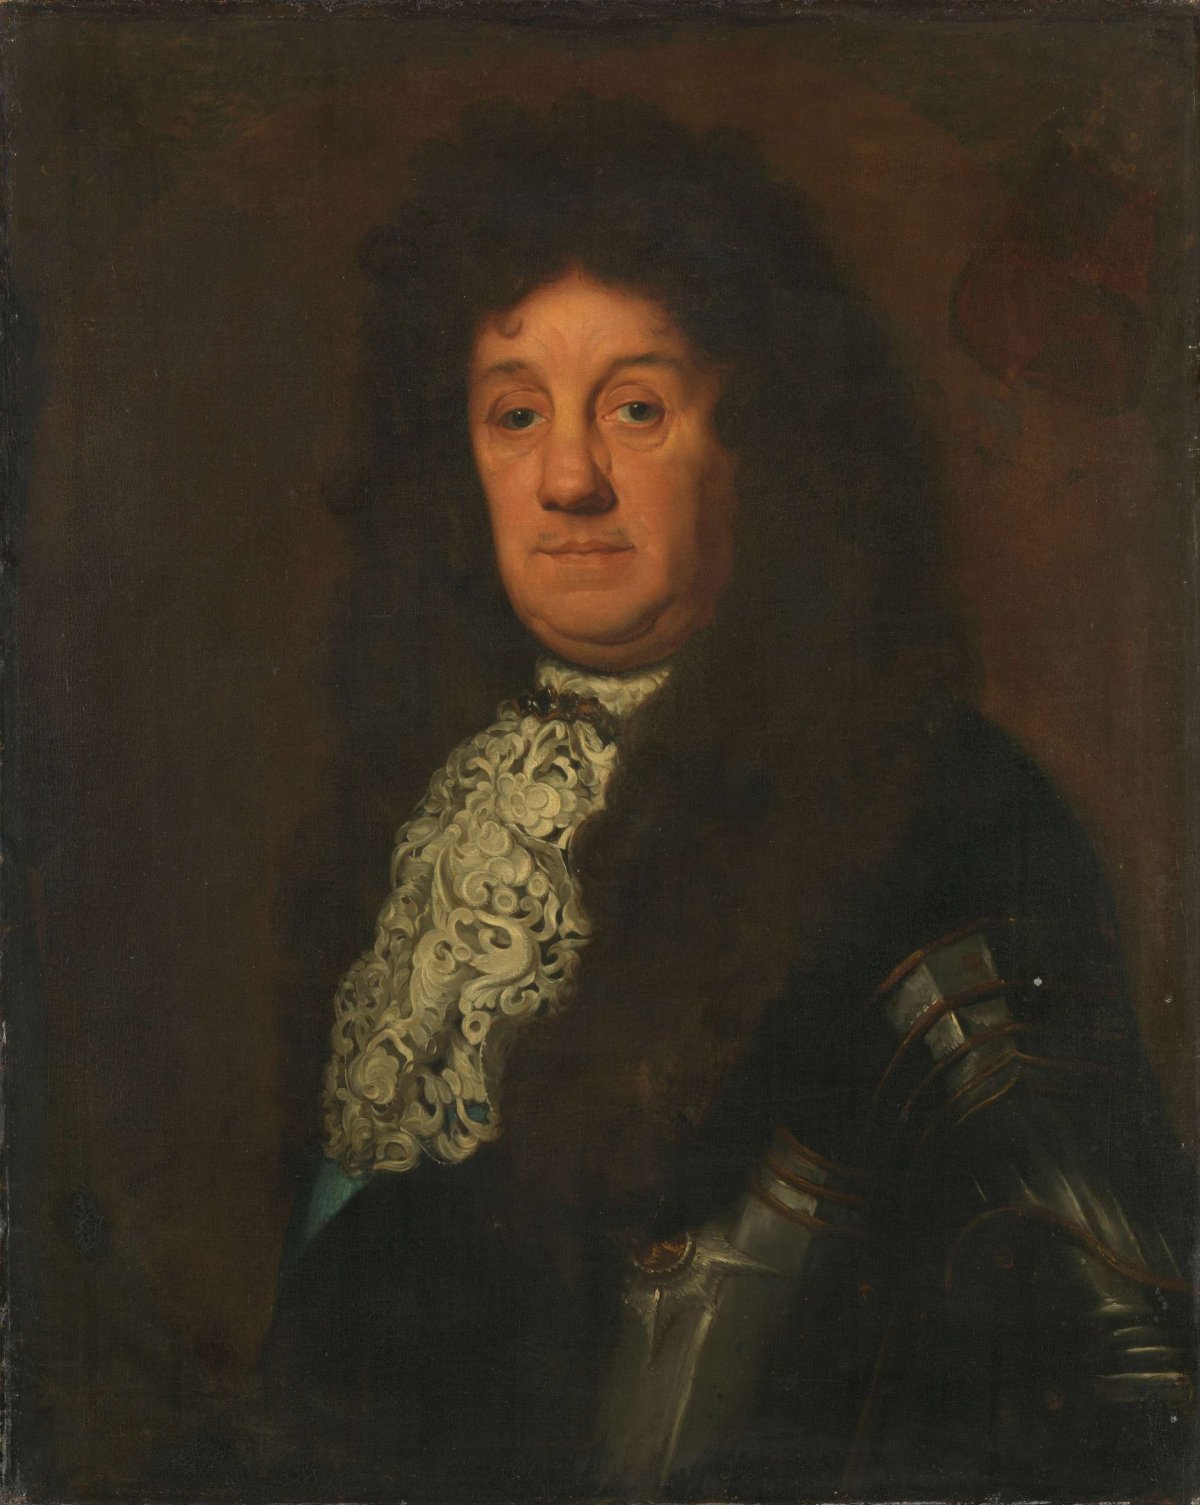 Portrait of Cornelis Tromp (1629-91), vice-admiral of Holland and West Friesland, David van der Plas, 1640 - 1690